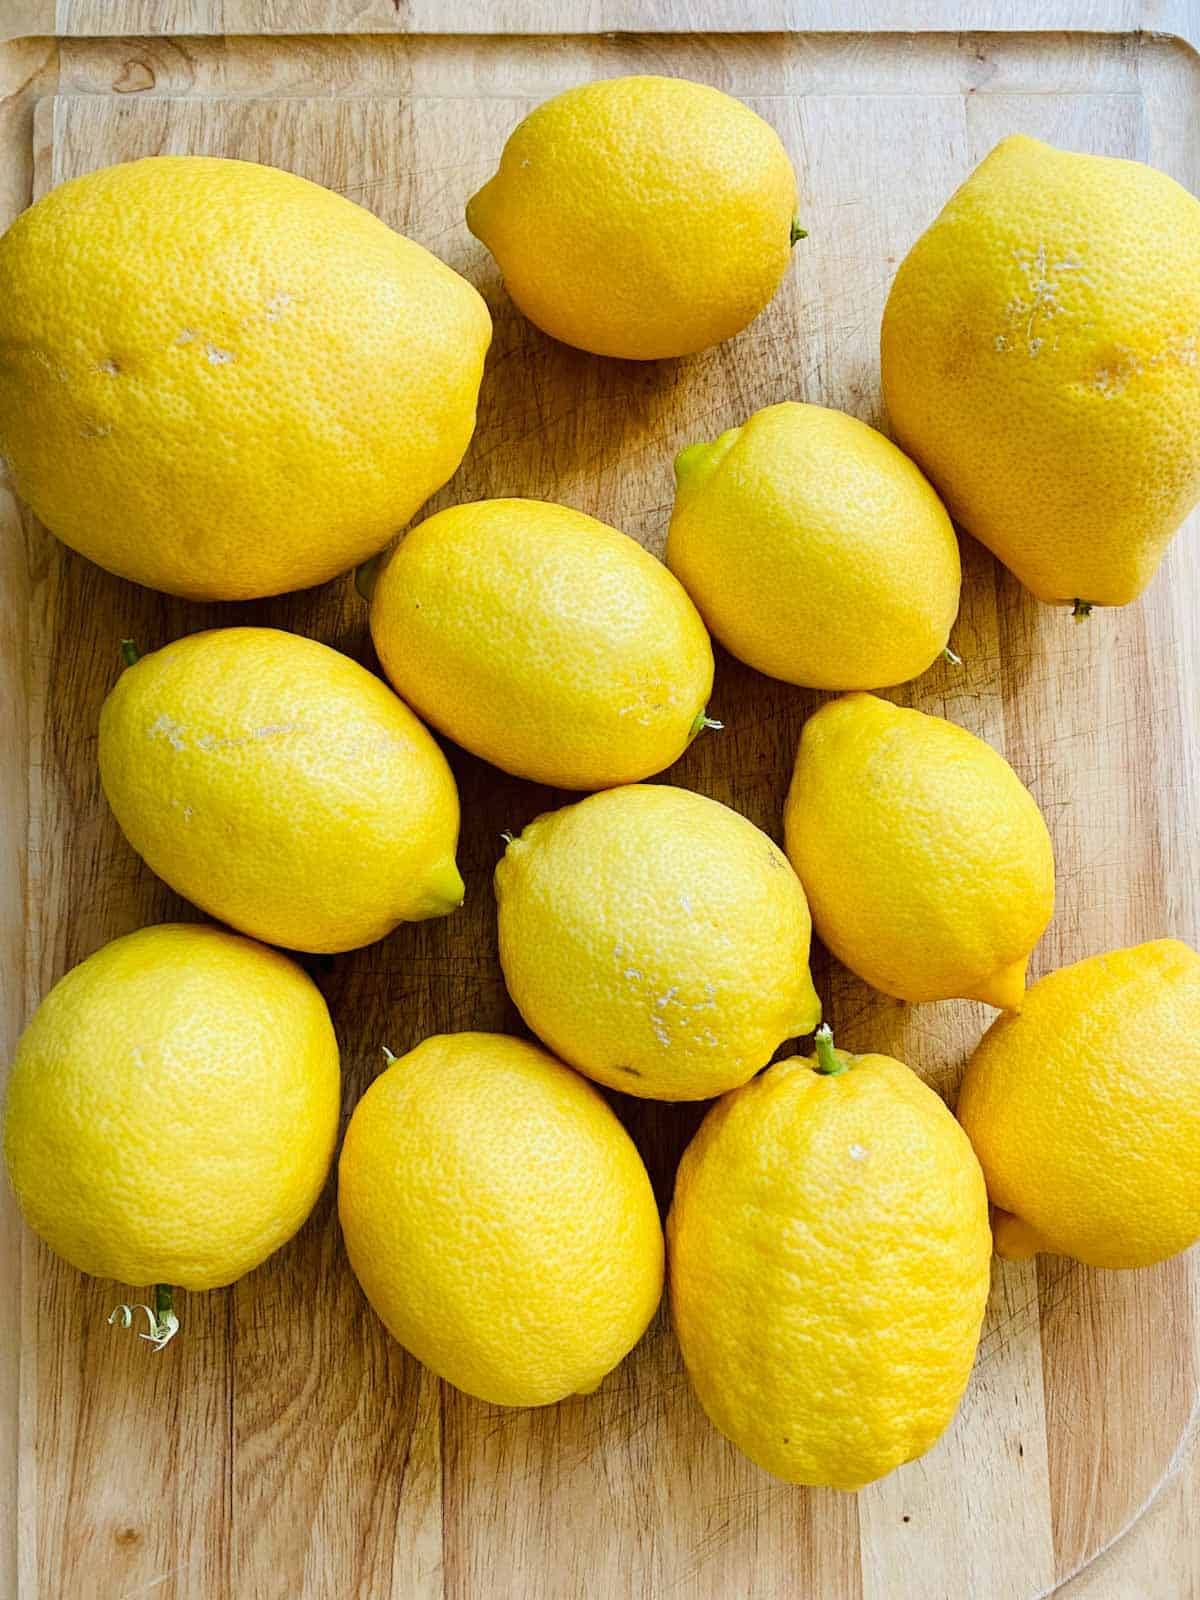 Twelve whole lemons on a cutting board